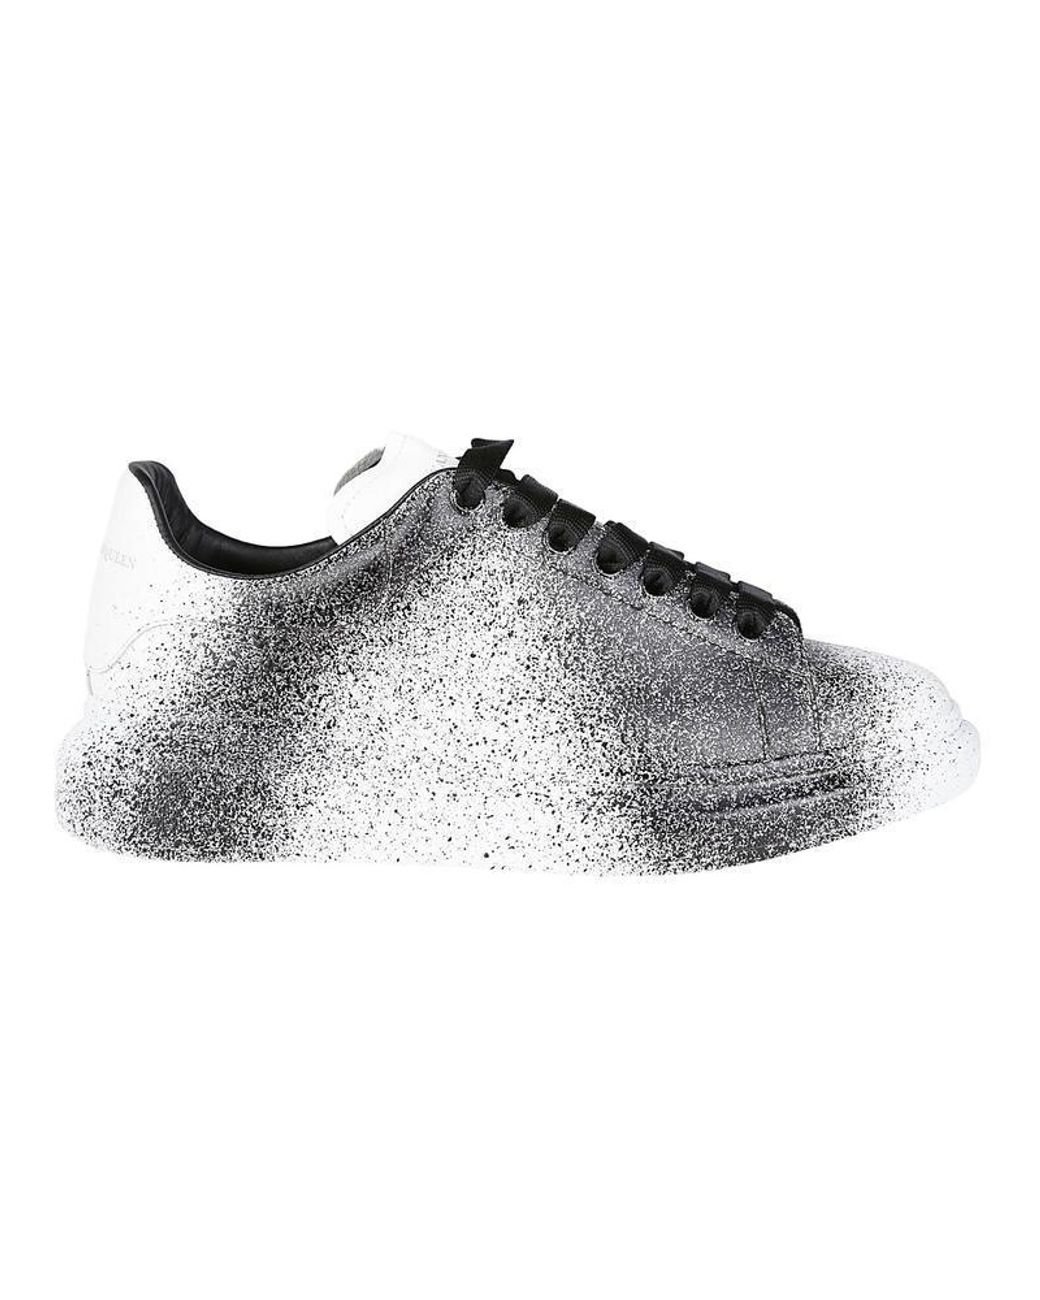 Alexander McQueen Spray Paint Sneakers in Black | Lyst